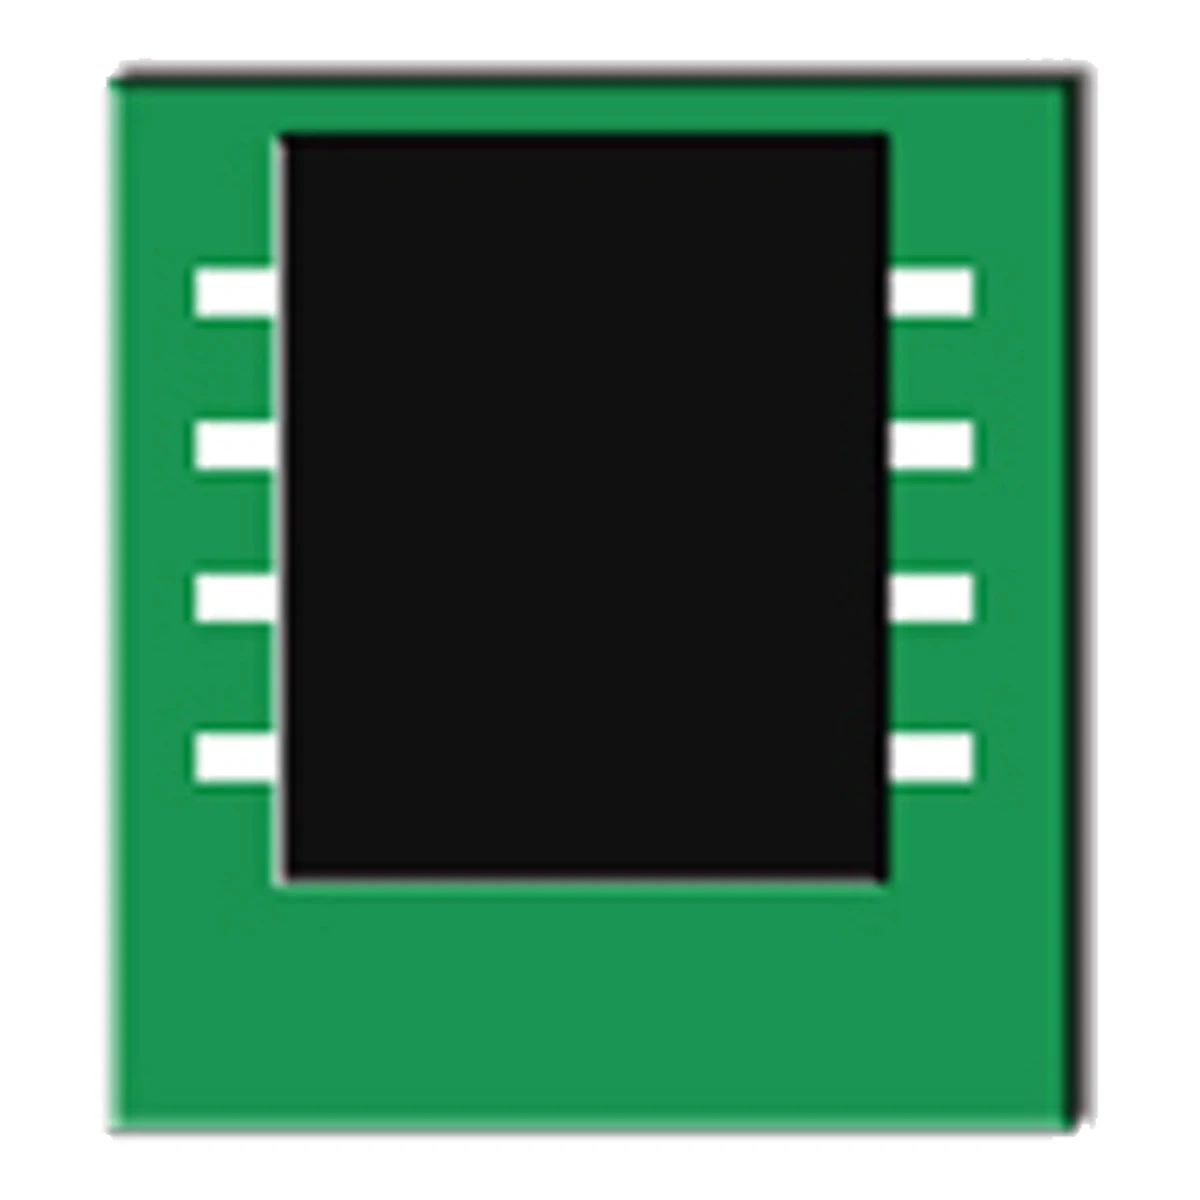 Toner Chip for HP LaserJet Enterprise Flow MFP M507n M507dn M507x M507dng M528dn M528f M528c M528z M-507n M-507dn M-507x M-507dn